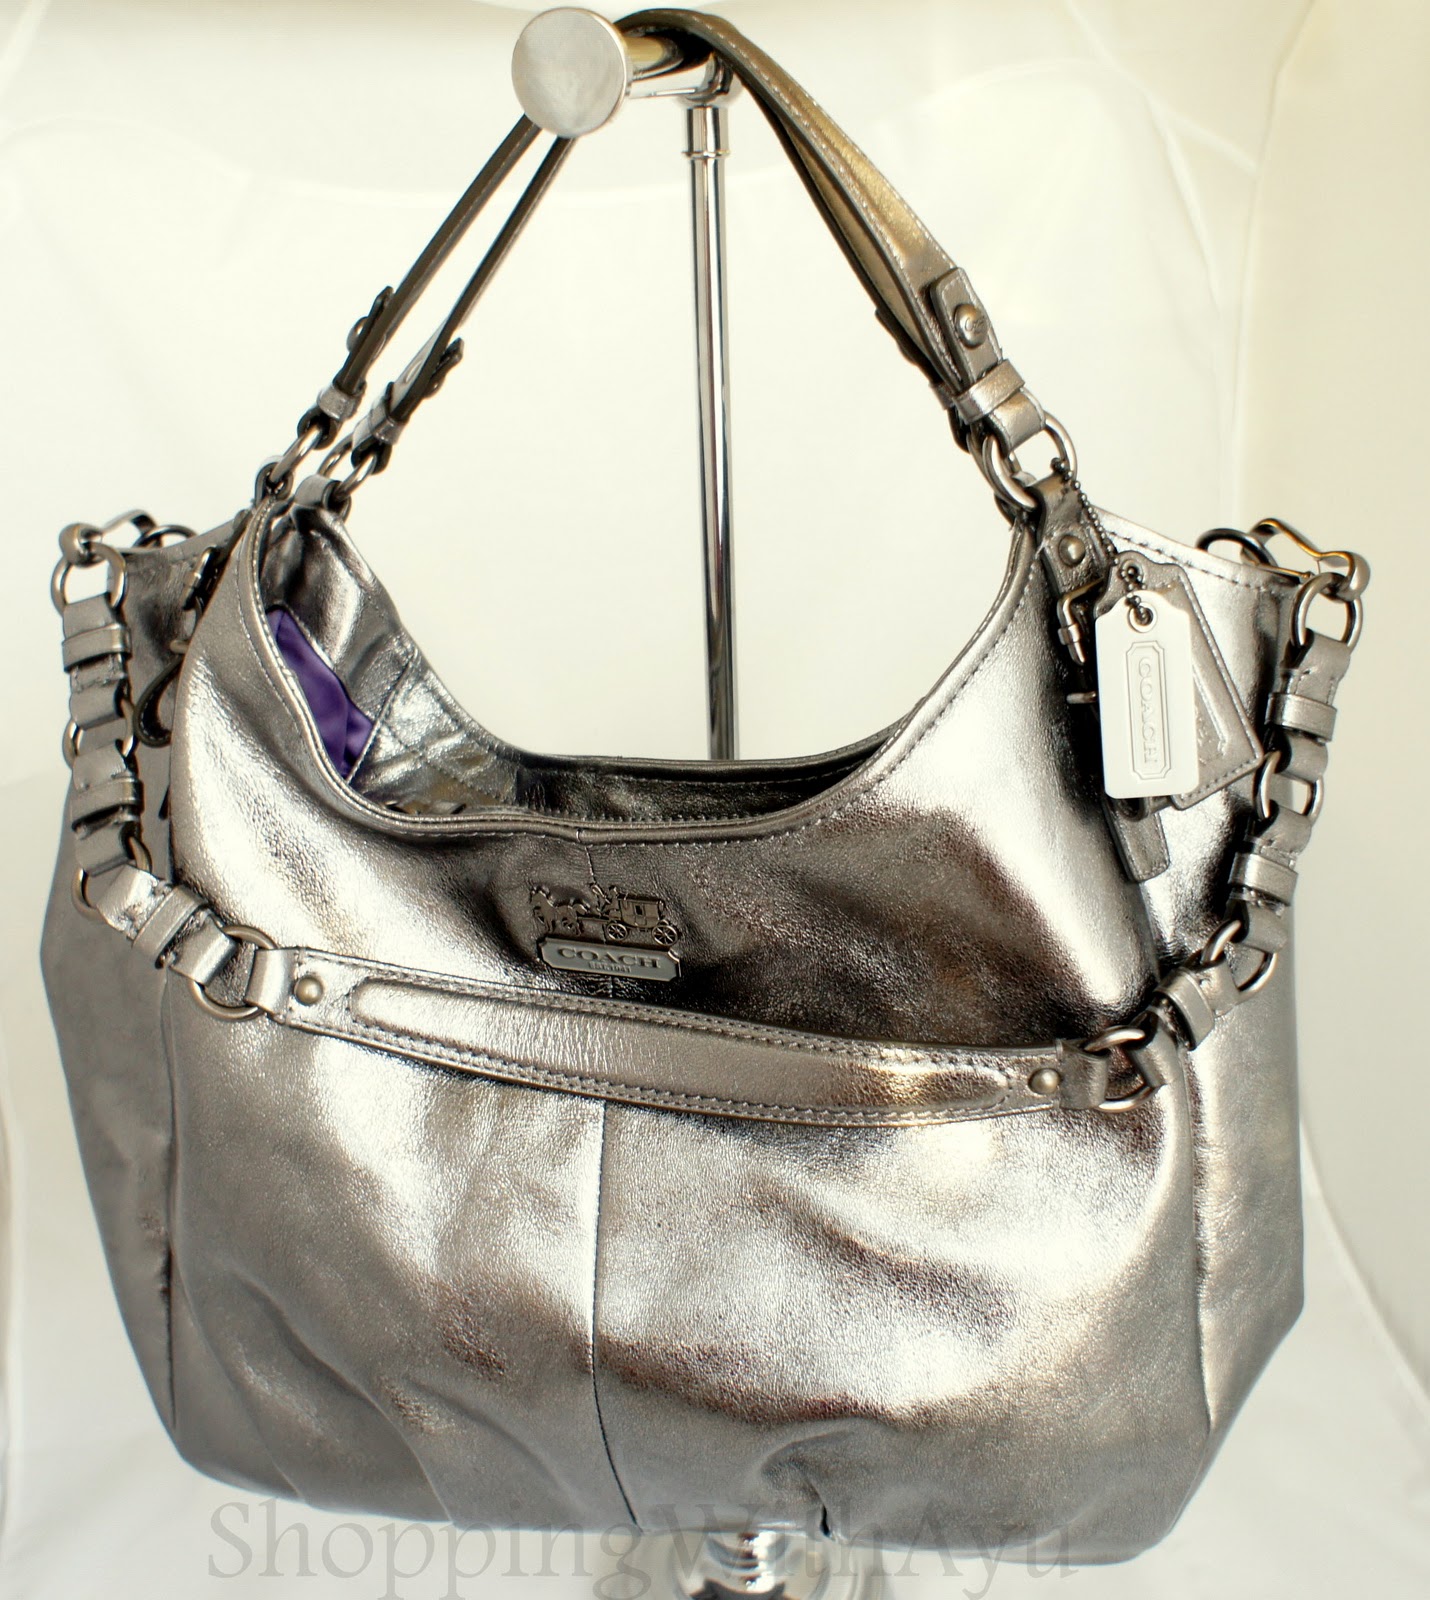 Shopping With Ayu: COACH Madison Leather Large Shoulder Bag Style 15958